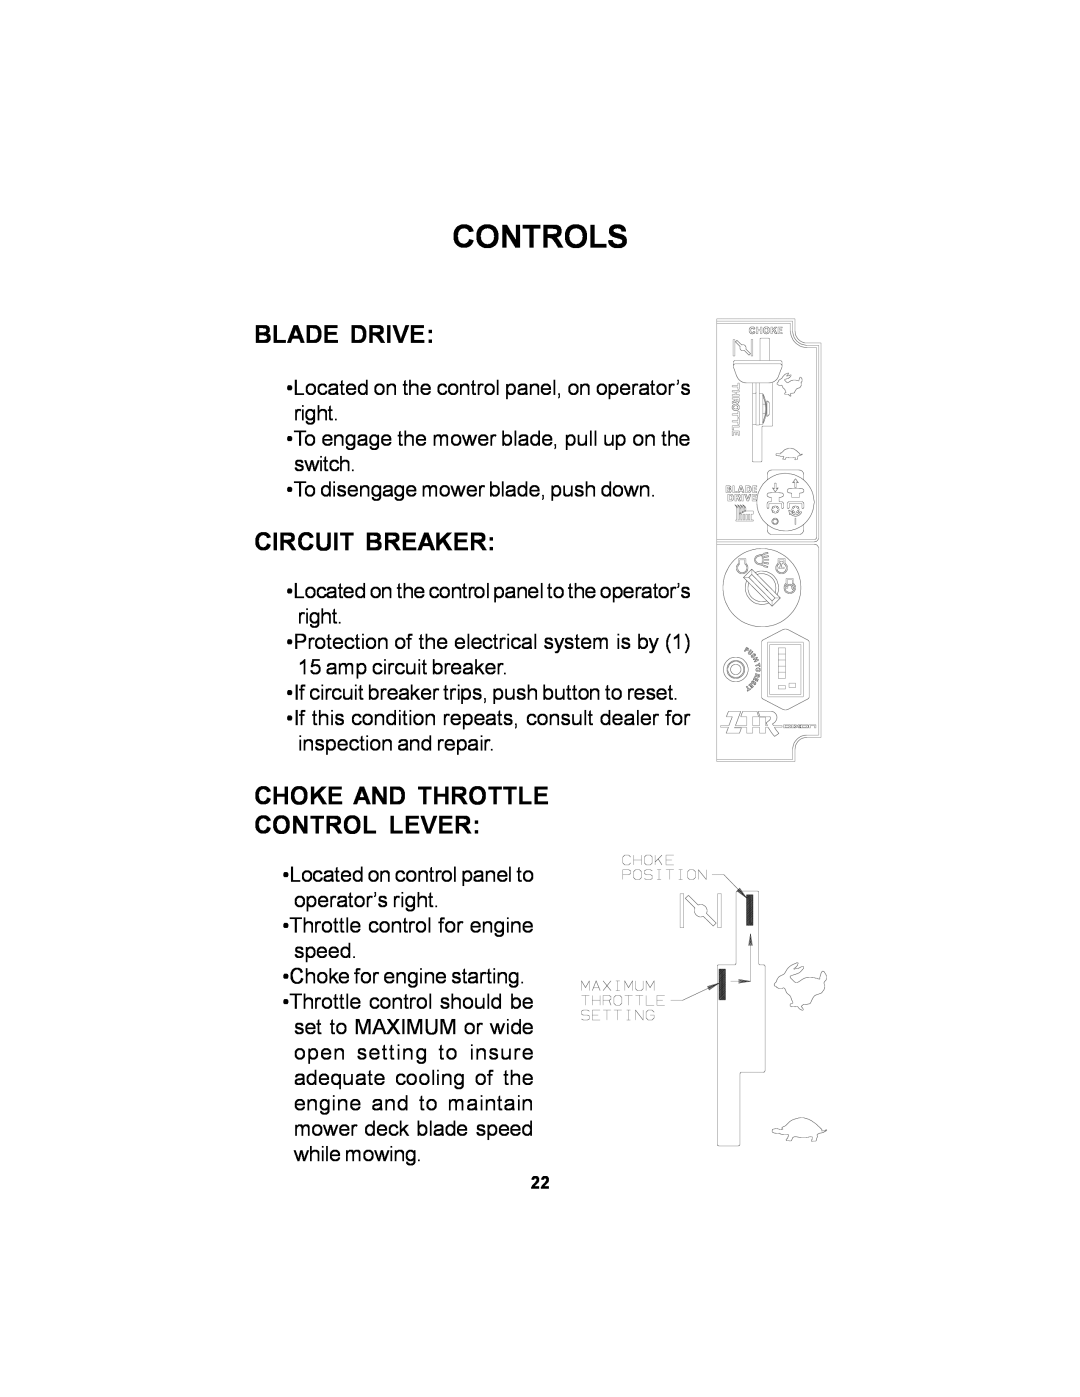 Dixon Black Bear manual Blade Drive, Circuit Breaker, Choke And Throttle Control Lever, Controls 